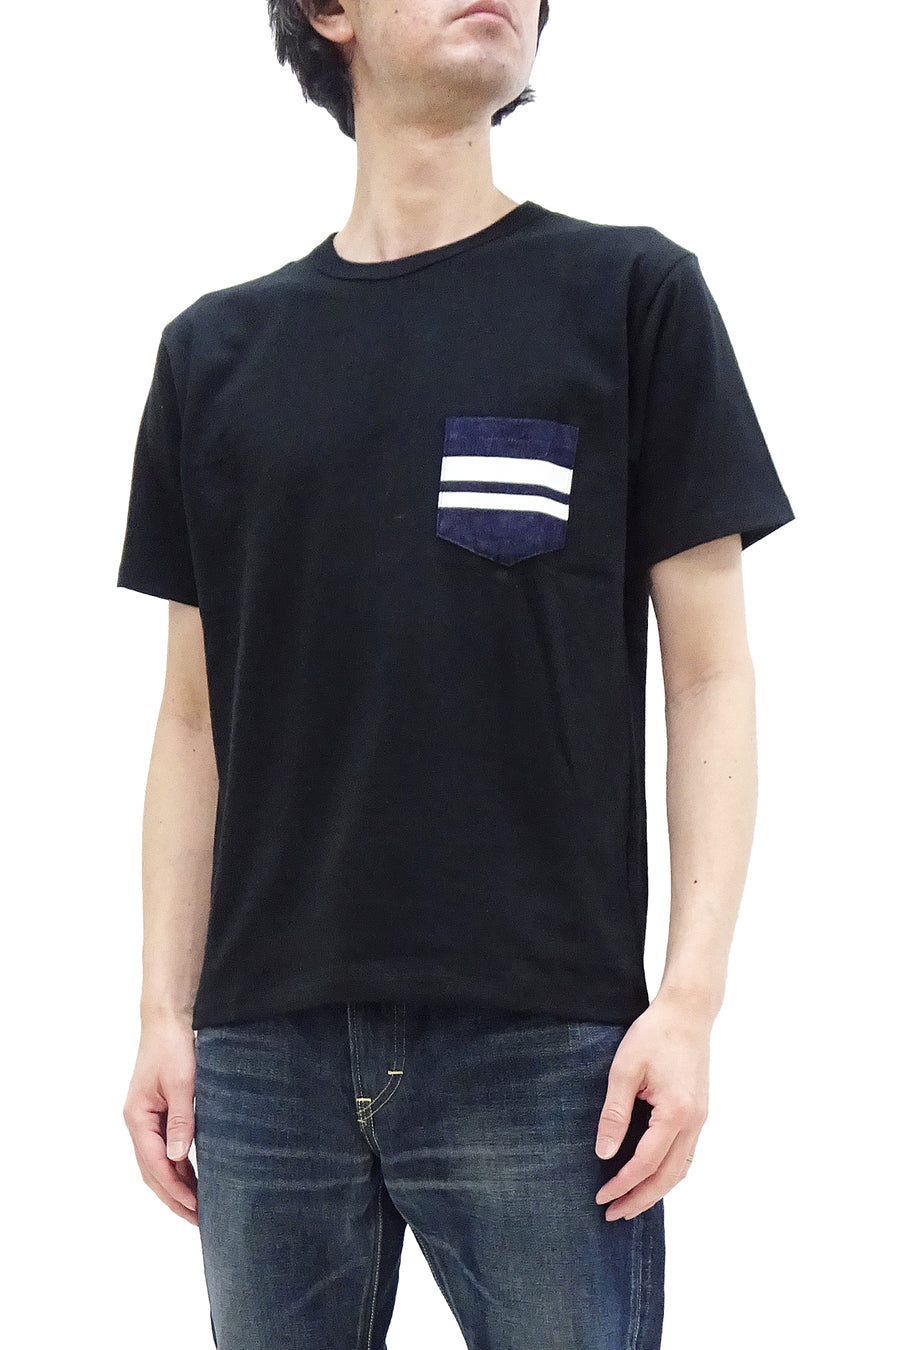 Momotaro Shirt Sleeve GTB shop Tee Jeans with Men\'s Pocket RODEO-JAPAN Short St T-shirt Pine-Avenue – Clothes